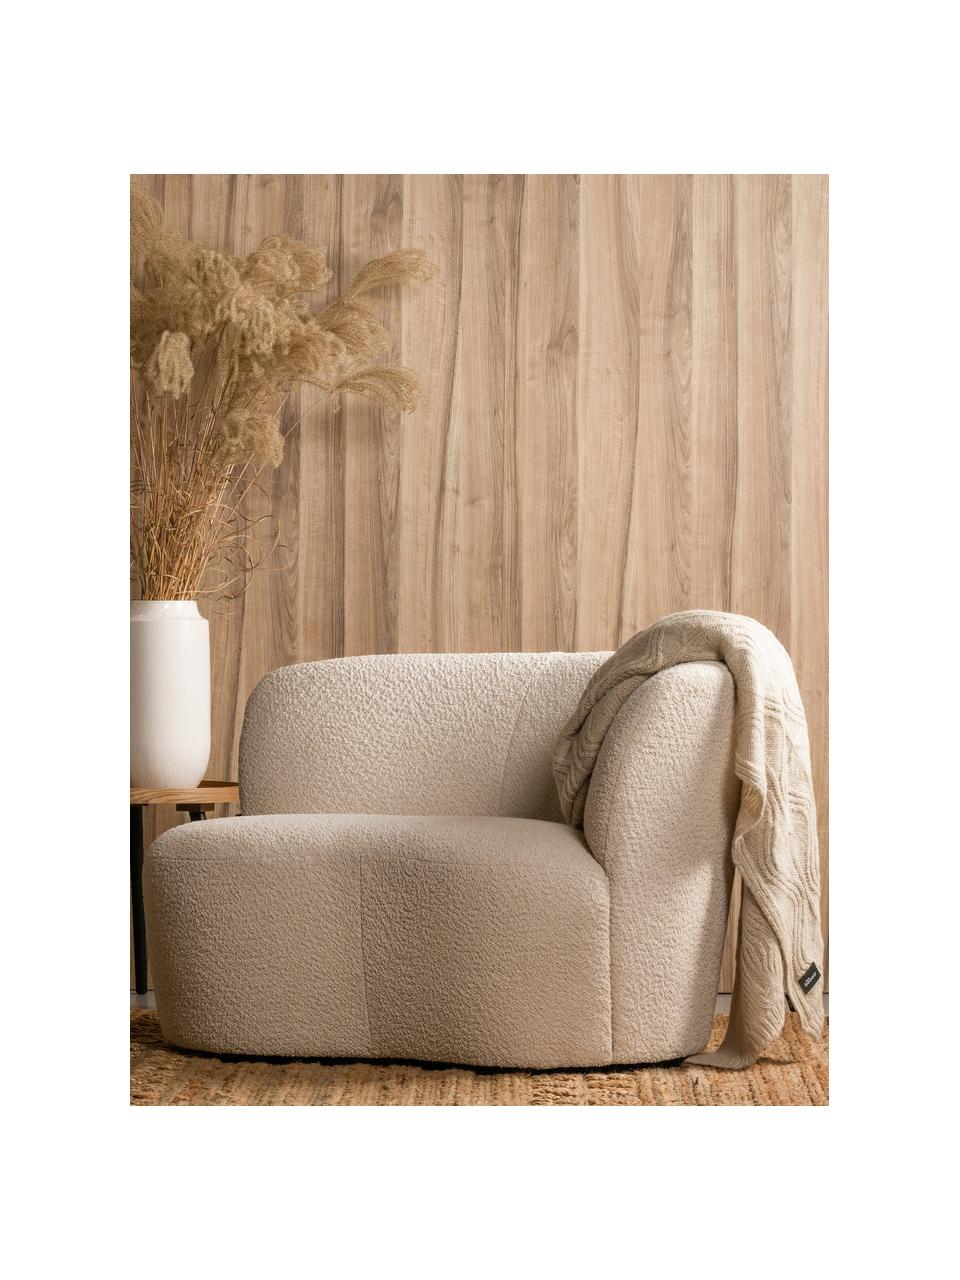 Grand fauteuil tissu bouclé Sibylla, En tissu bouclé beige, larg. 112 x prof. 80 cm